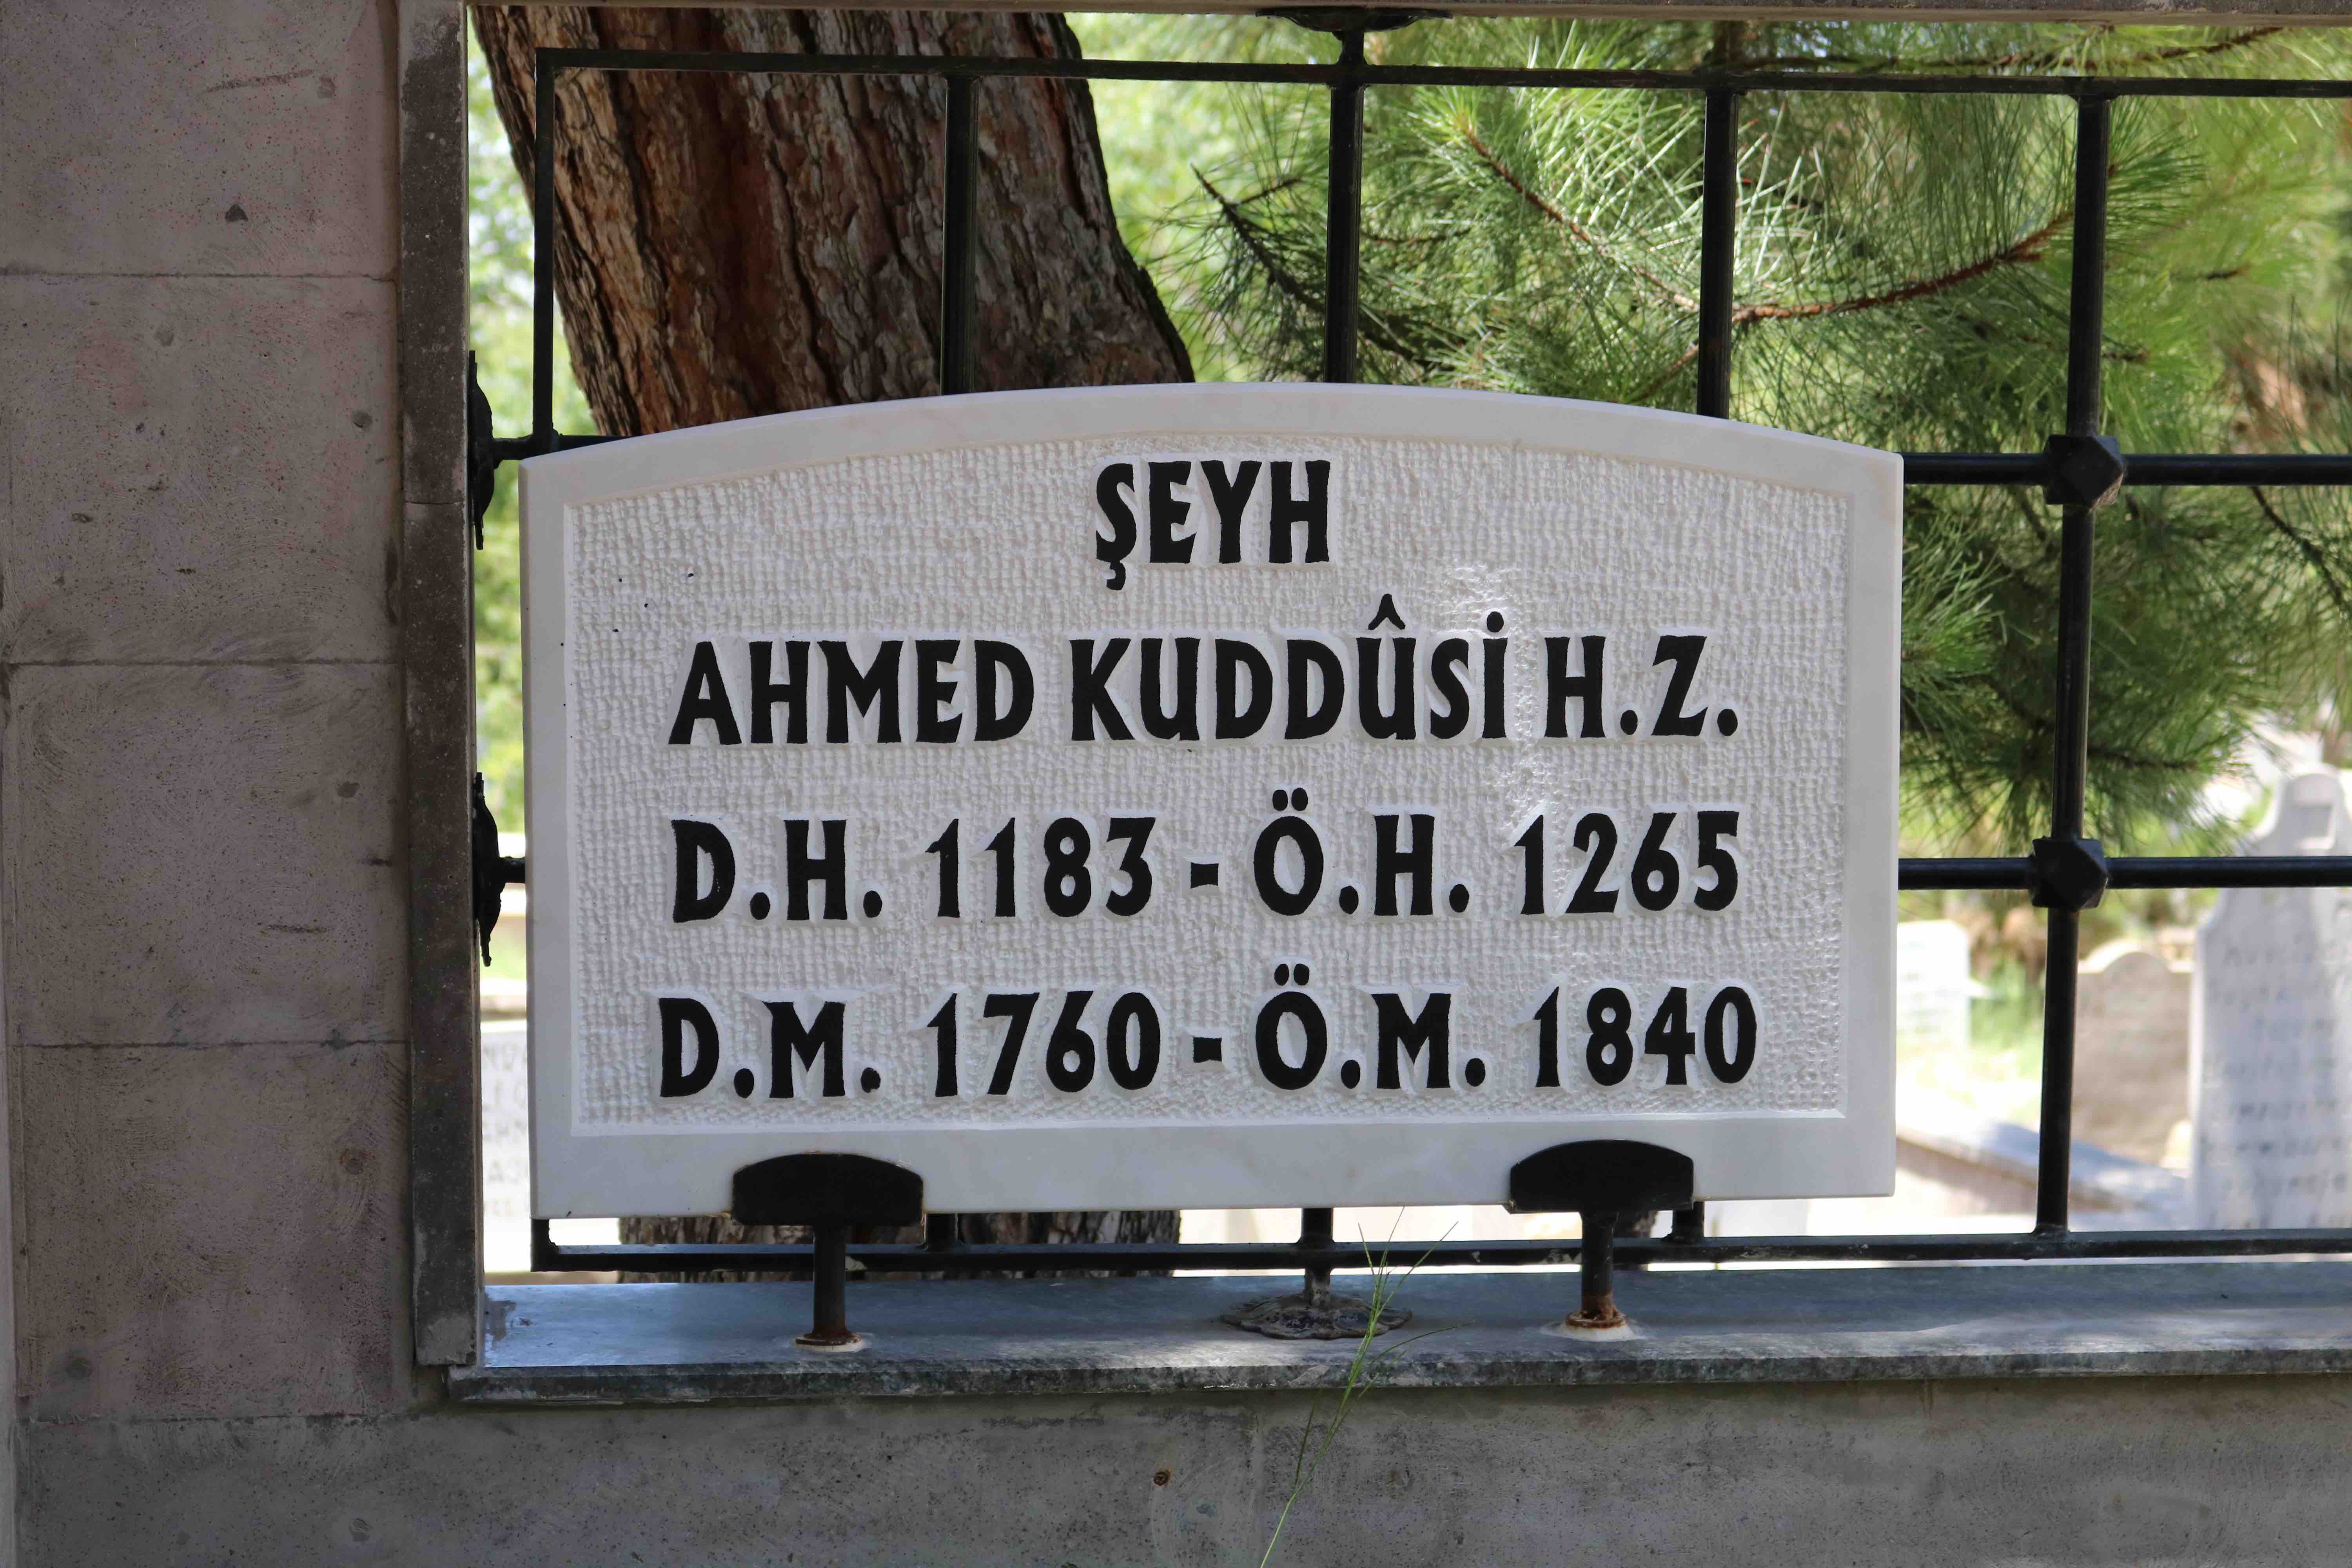 Şeyh Ahmed Kuddusi